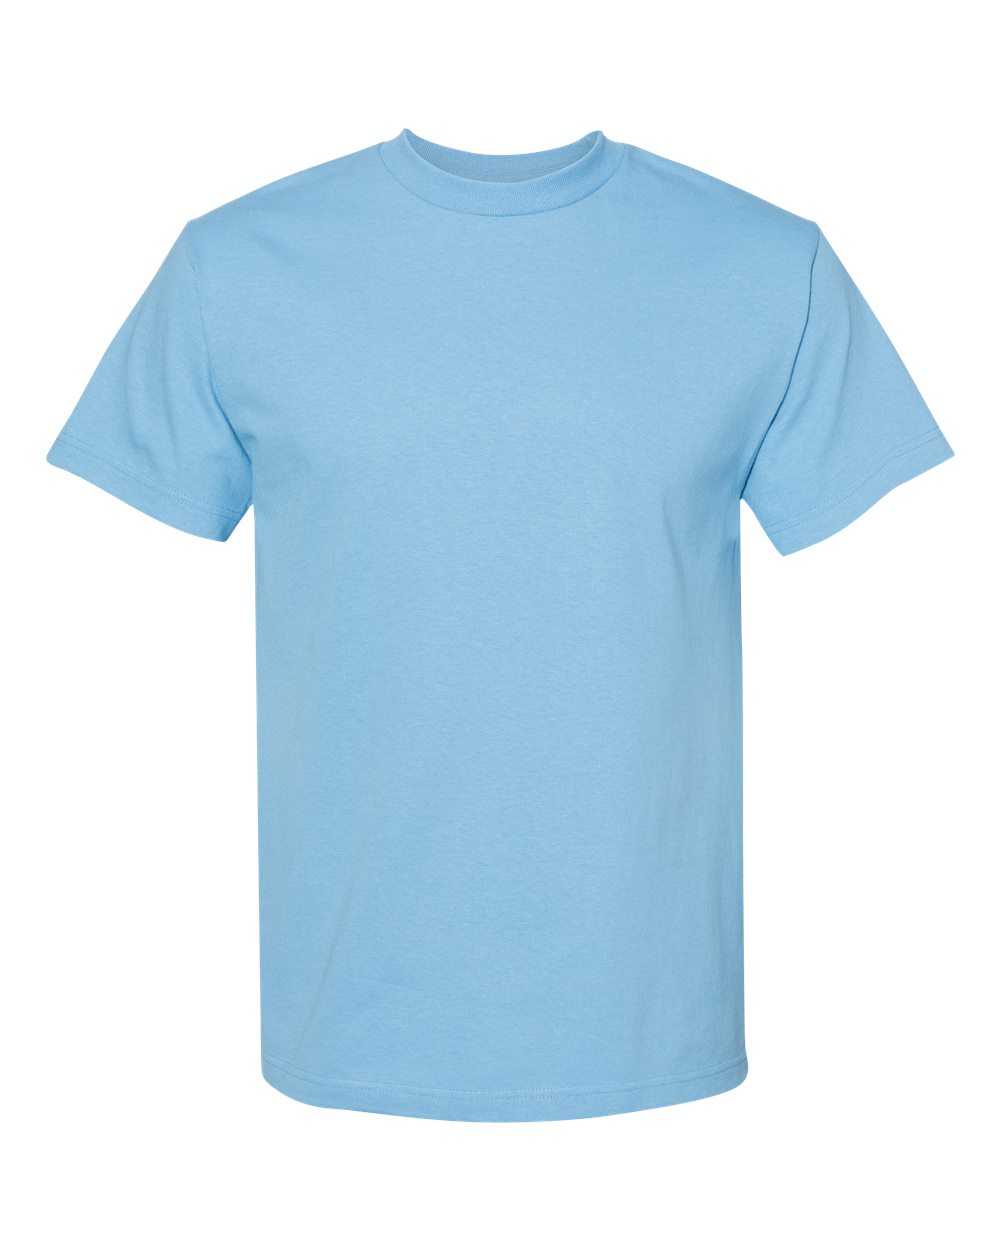 American Apparel 1301 Unisex Heavyweight Cotton T-Shirt - Carolina Blue - HIT a Double